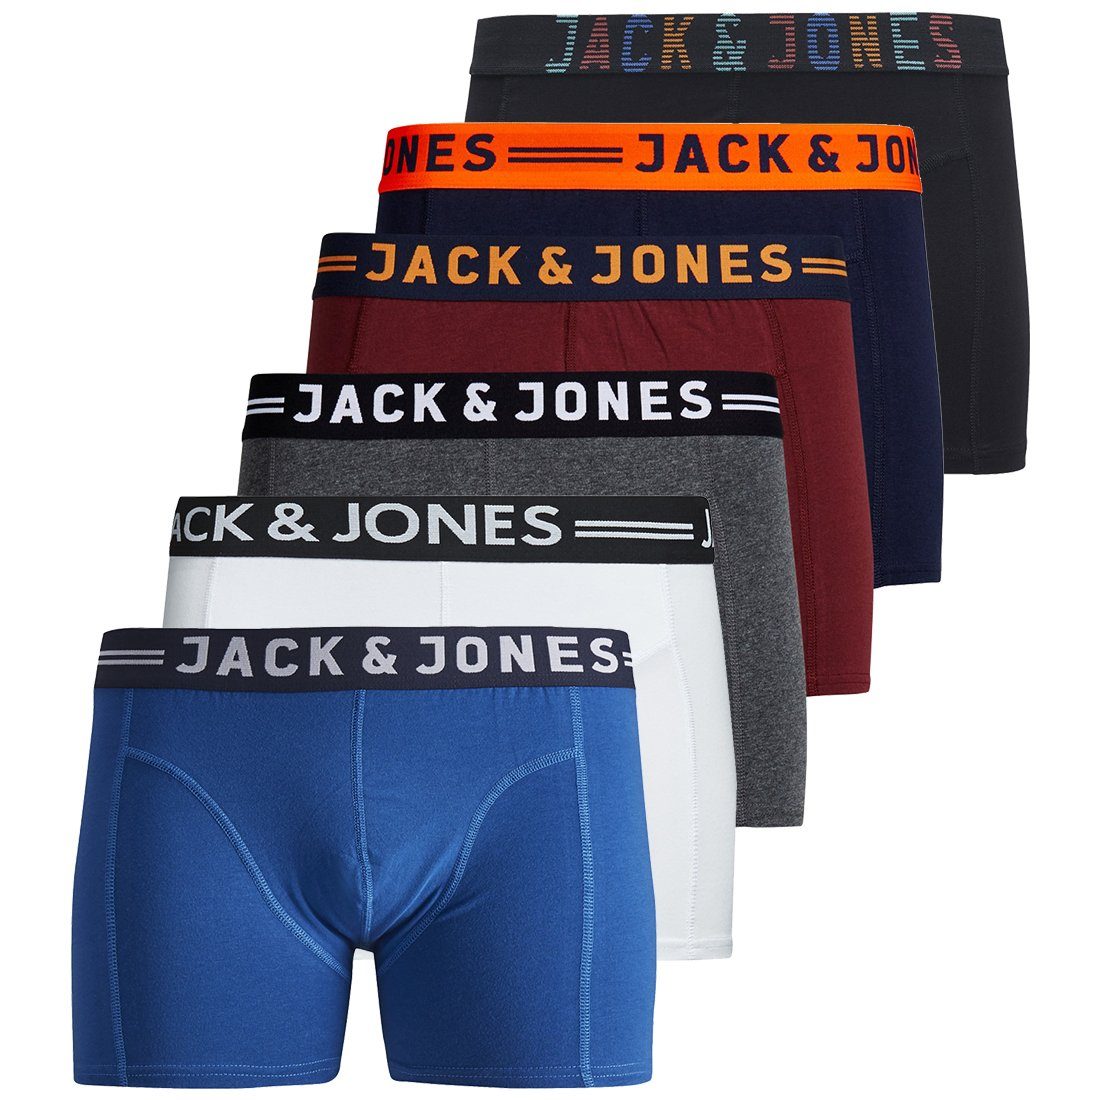 6er Mehrfarbig4 Jones Jack & L Boxershorts Marke Pack Short XL M JACK XXL Boxershorts S Unterhose Herren JONES Männer